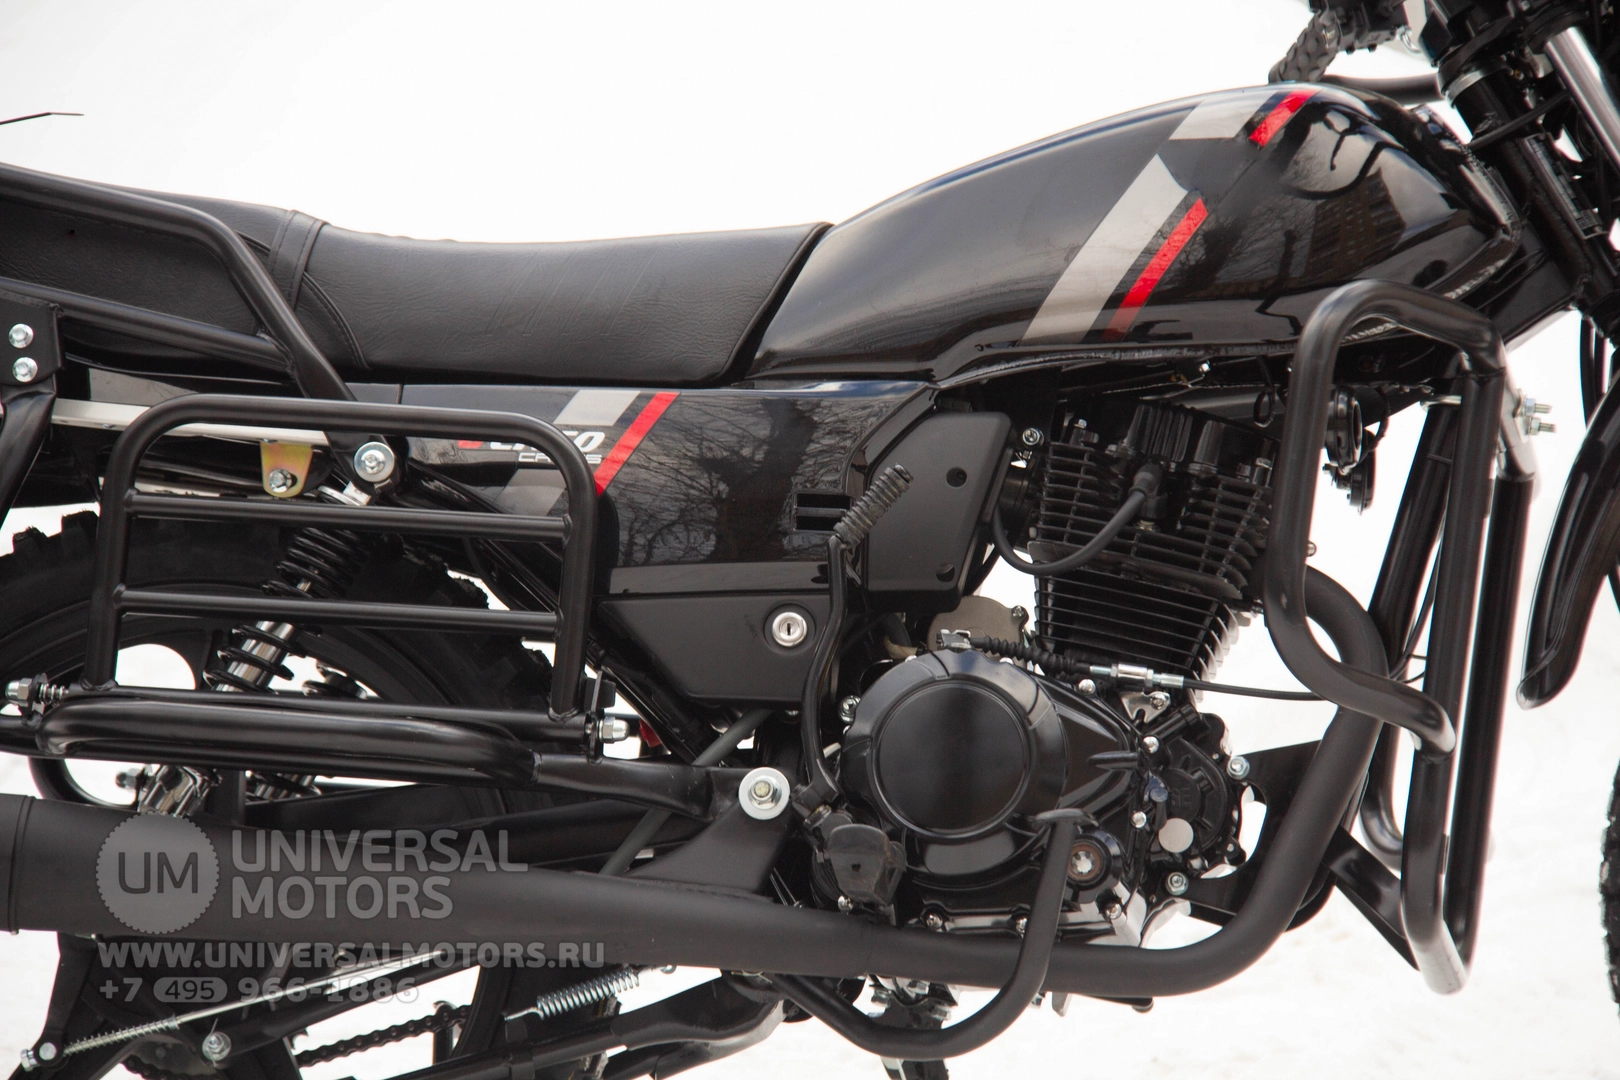 Мотоцикл UNIVERSAL V - CROSS 200cc, 30458466342032567416